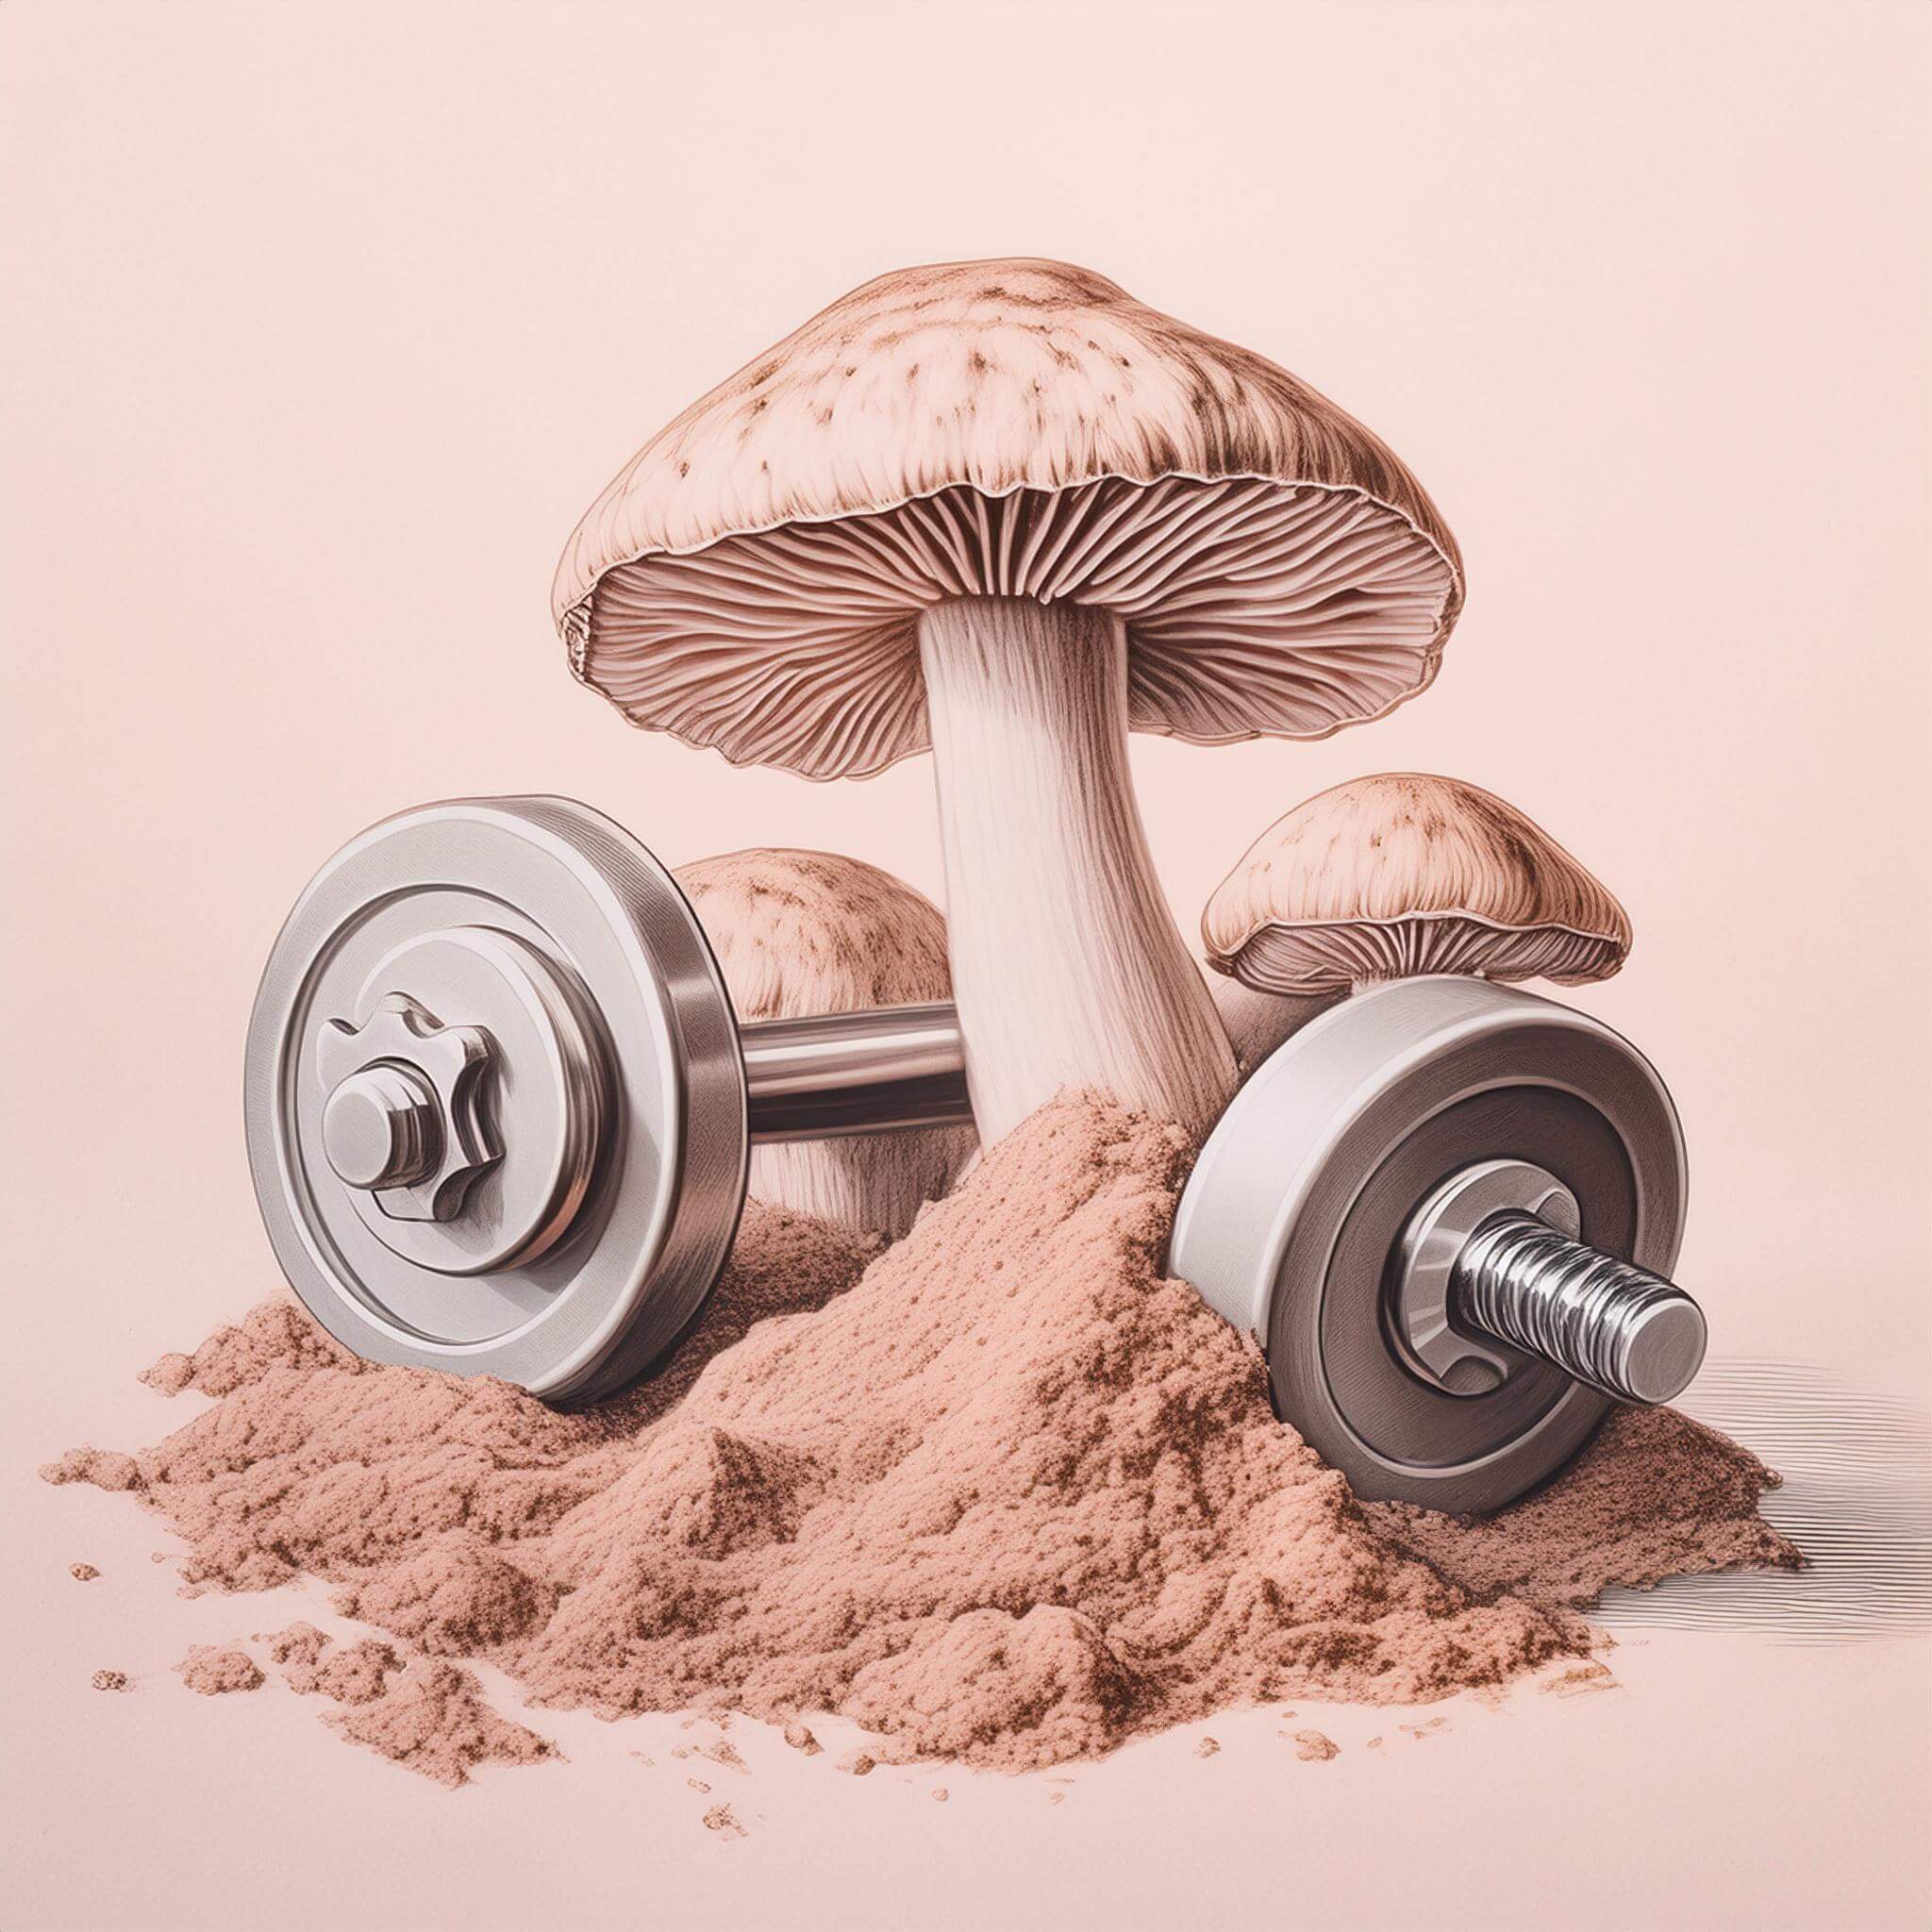 drawing of mushrooms and mushroom powder and weights  illustrating mushrooms for athletics